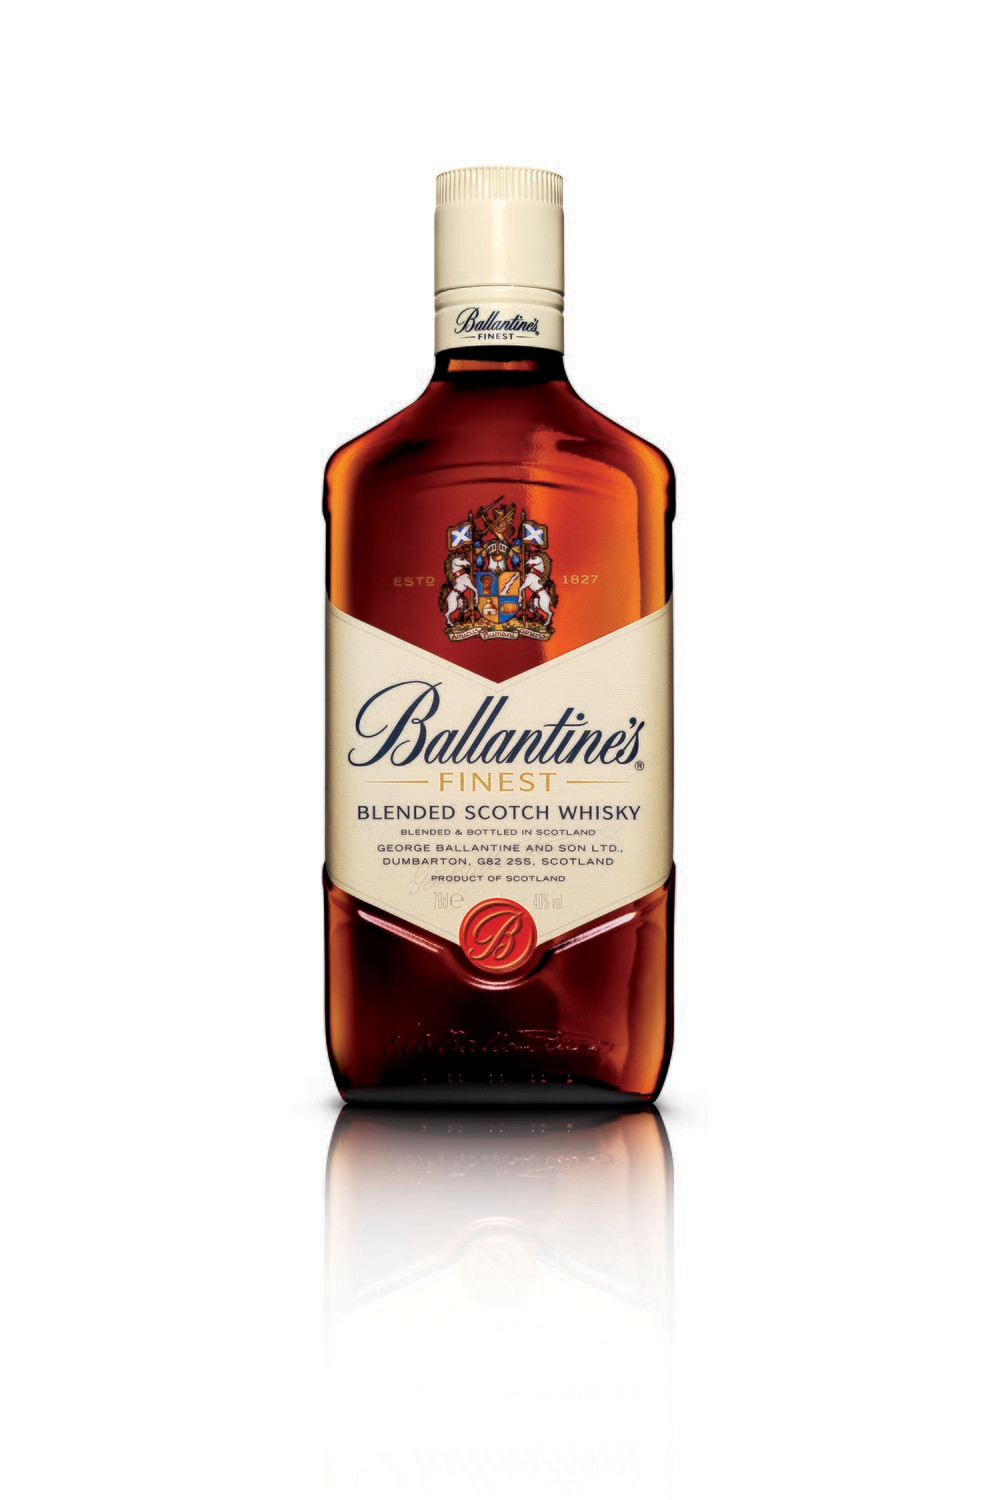 Ballantine's Finest Blended Scotch Whisky / 0,7l Flasche / 13,99€